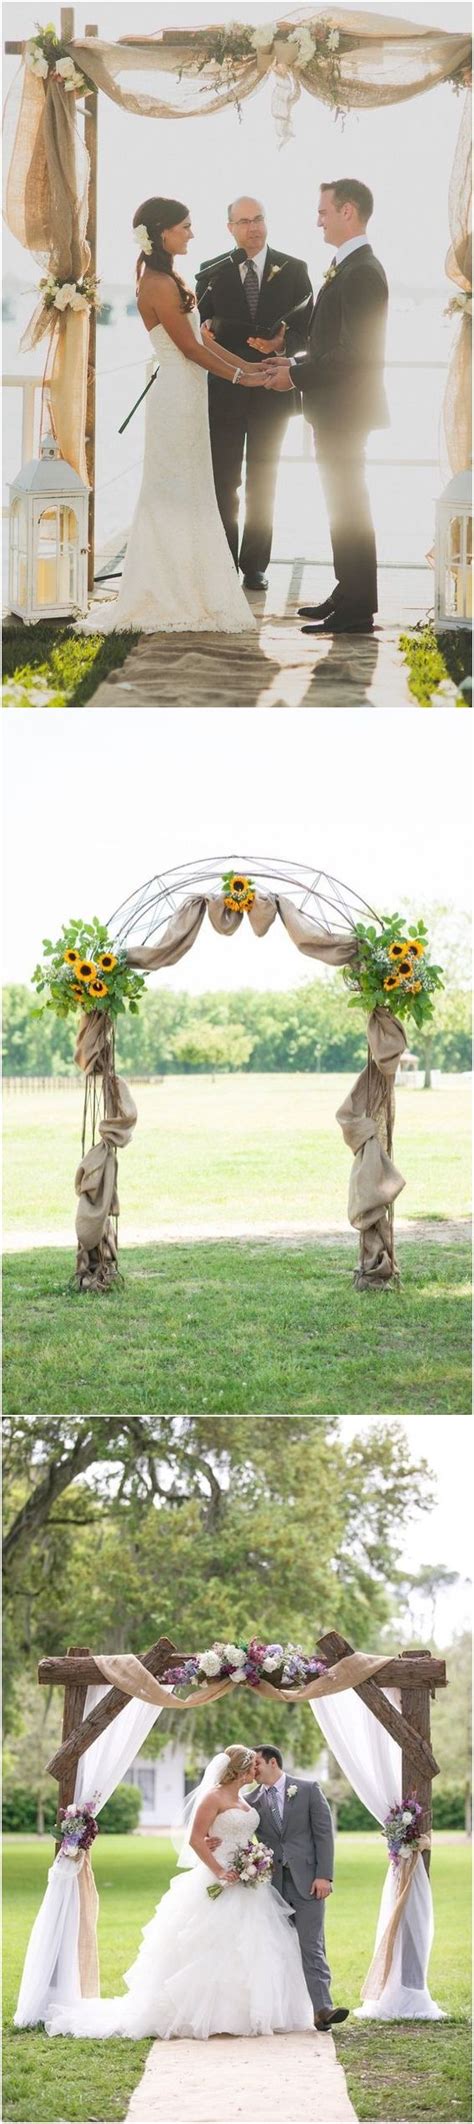 Rustic Burlap Wedding Arches And Backdrop Ideas Weddings Rusticweddings